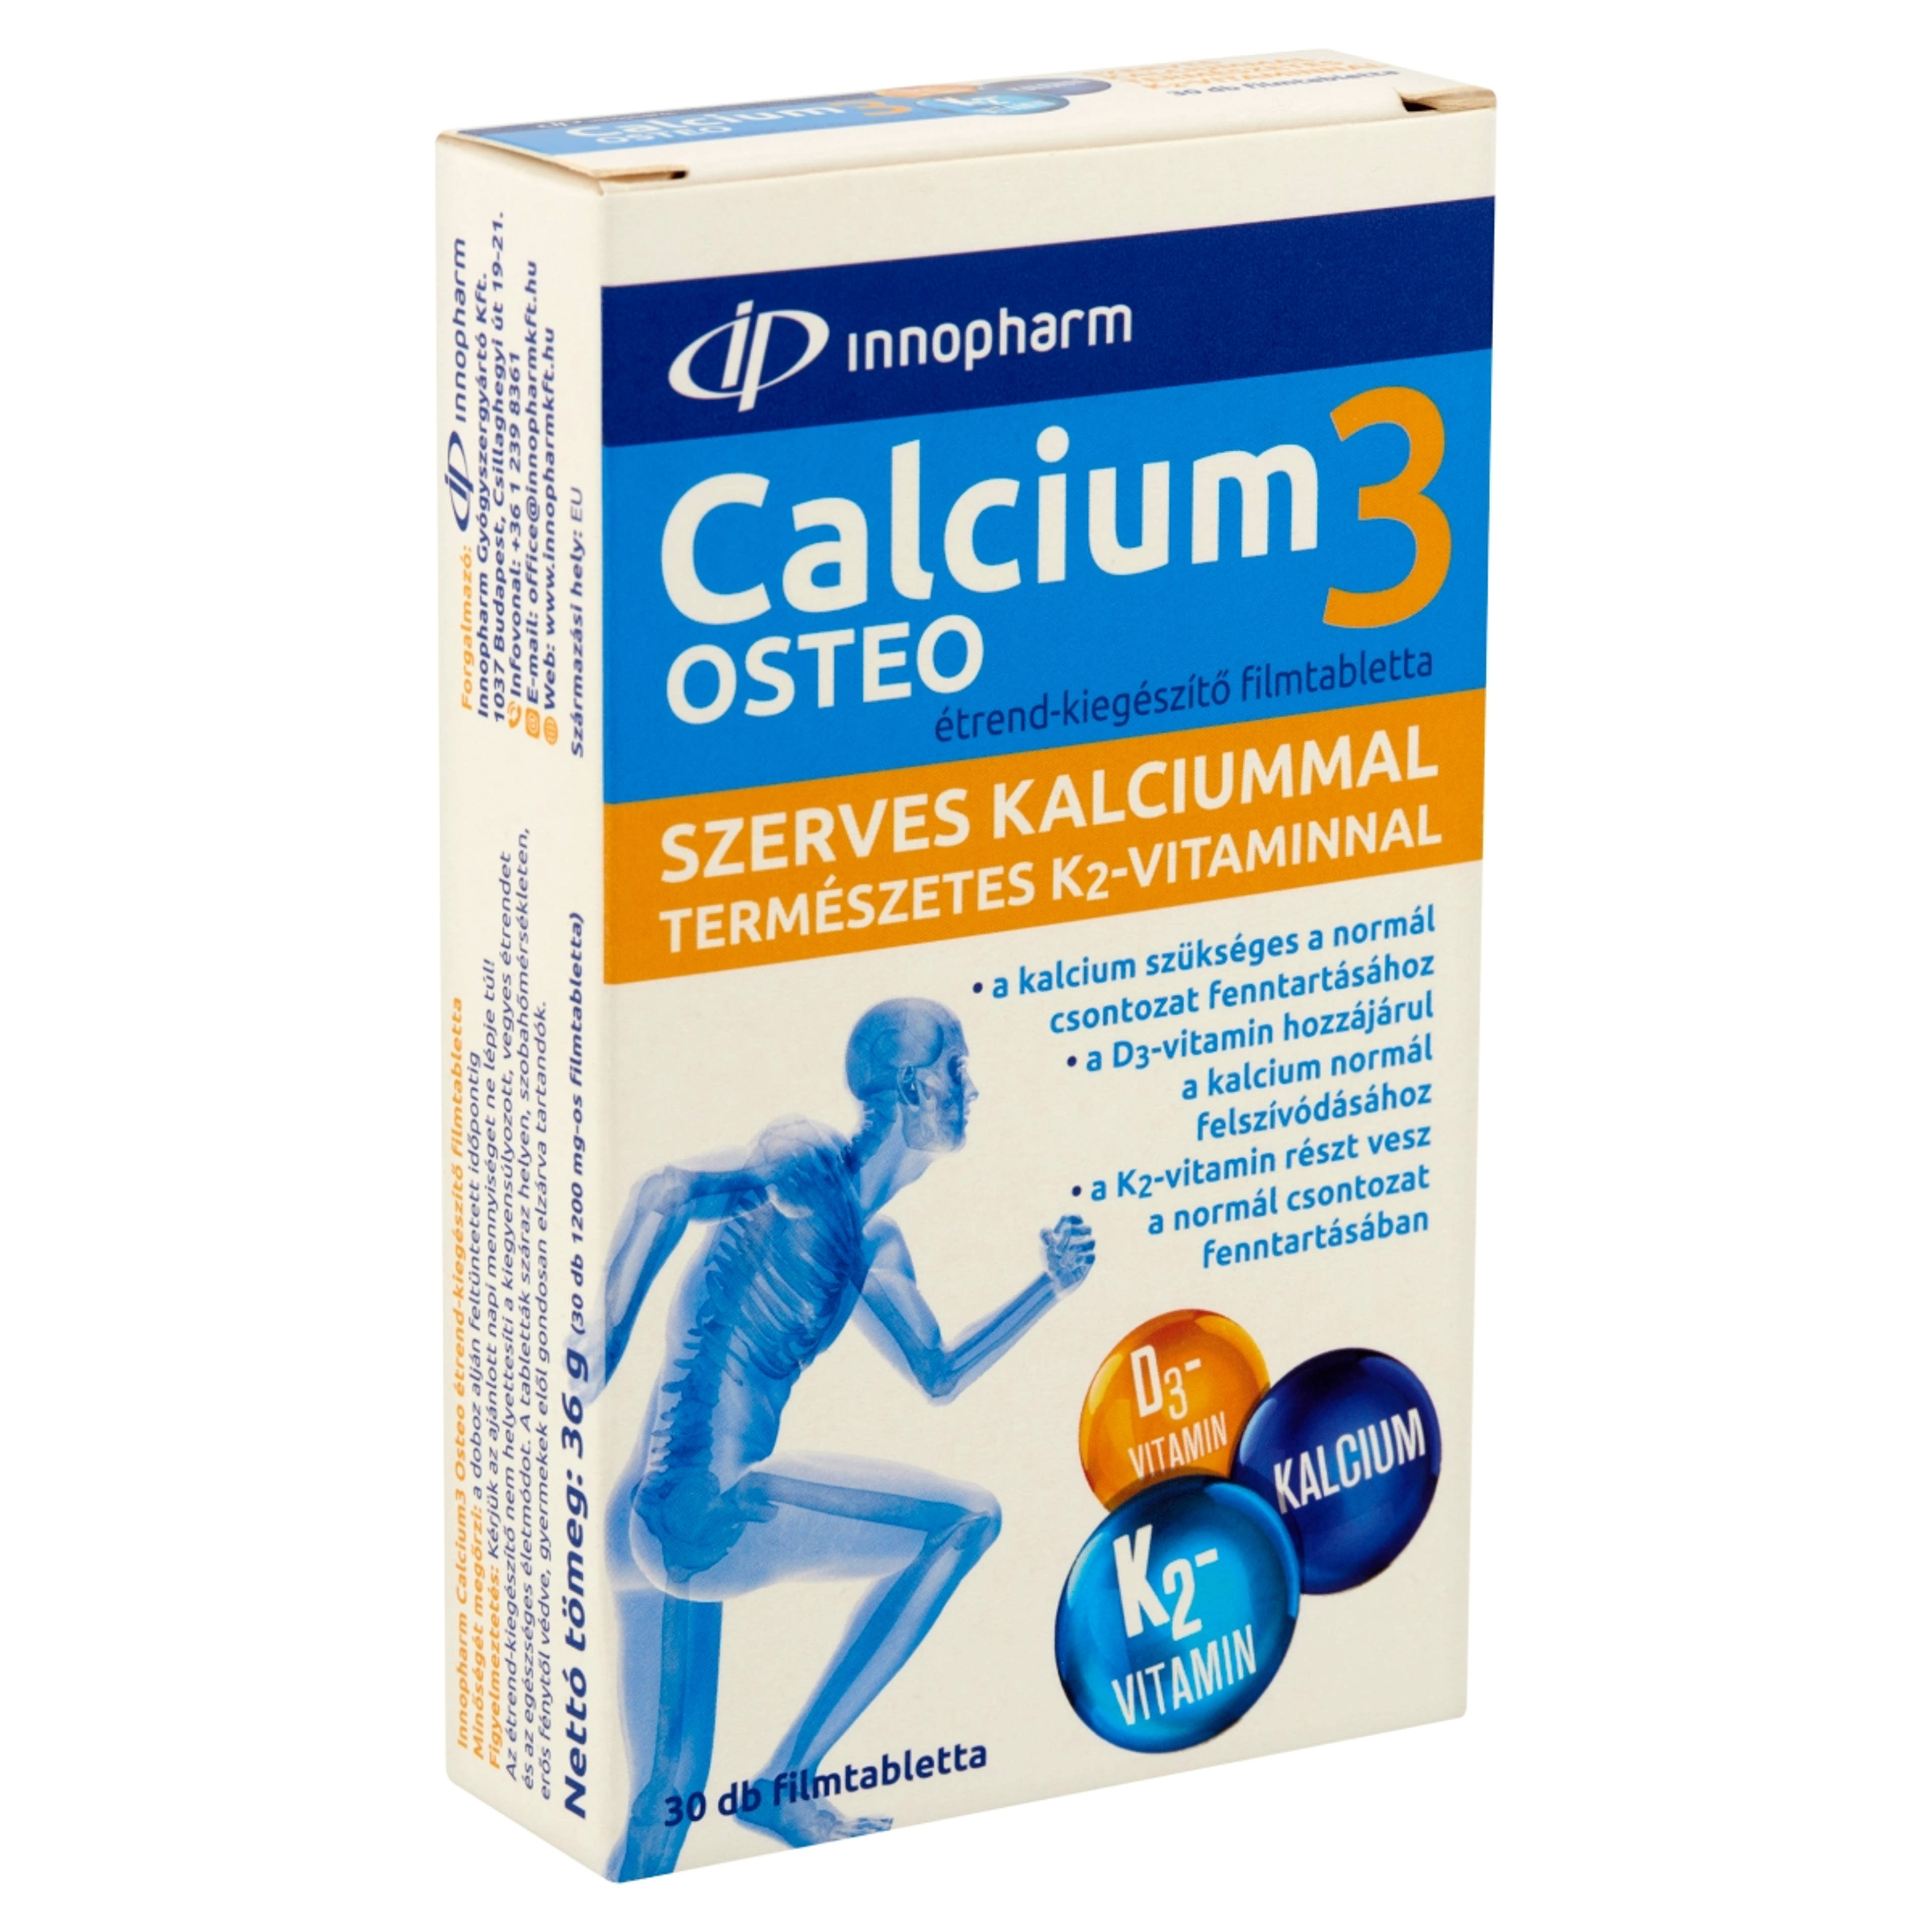 Innopharm Calcium 3 Osteo Filmtabletta - 30 db-3